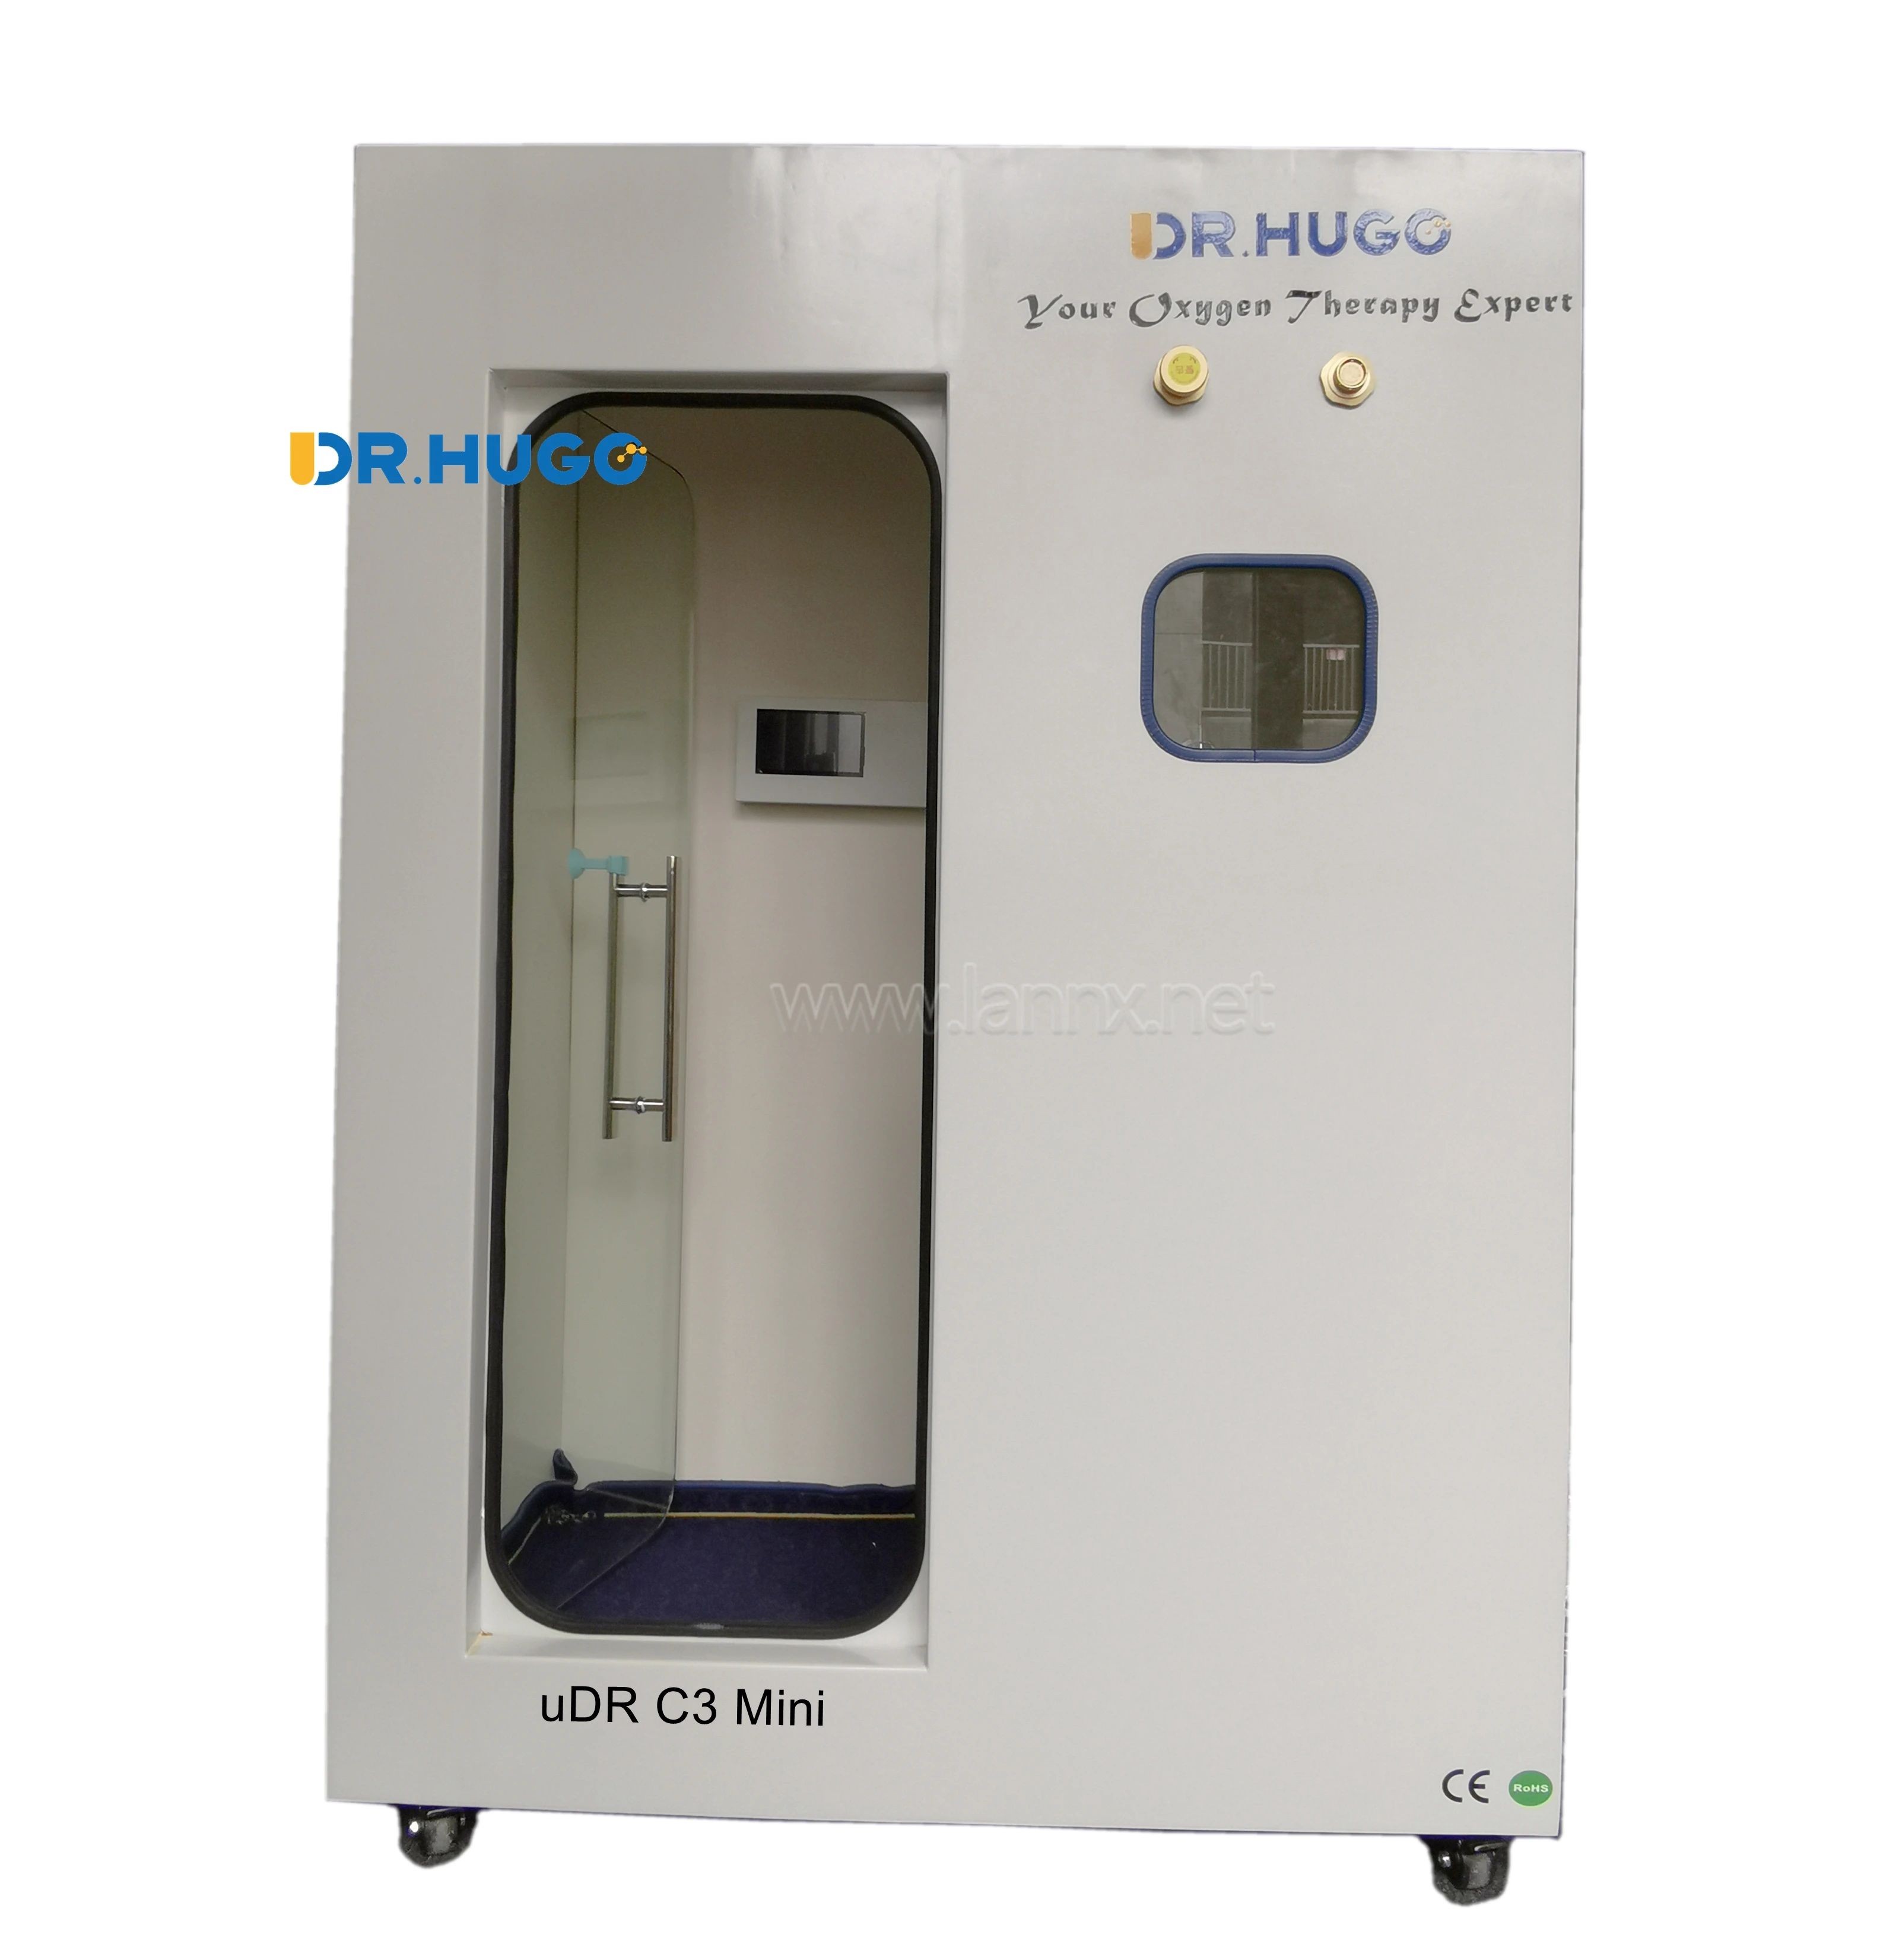 

DR.HUGO uDR C3 Mini Hot selling Oxygen Box style Chambers HBOT Portable Oxigen Chamber 1.3 Ata Hard Hyperbaric Oxygen Chamber